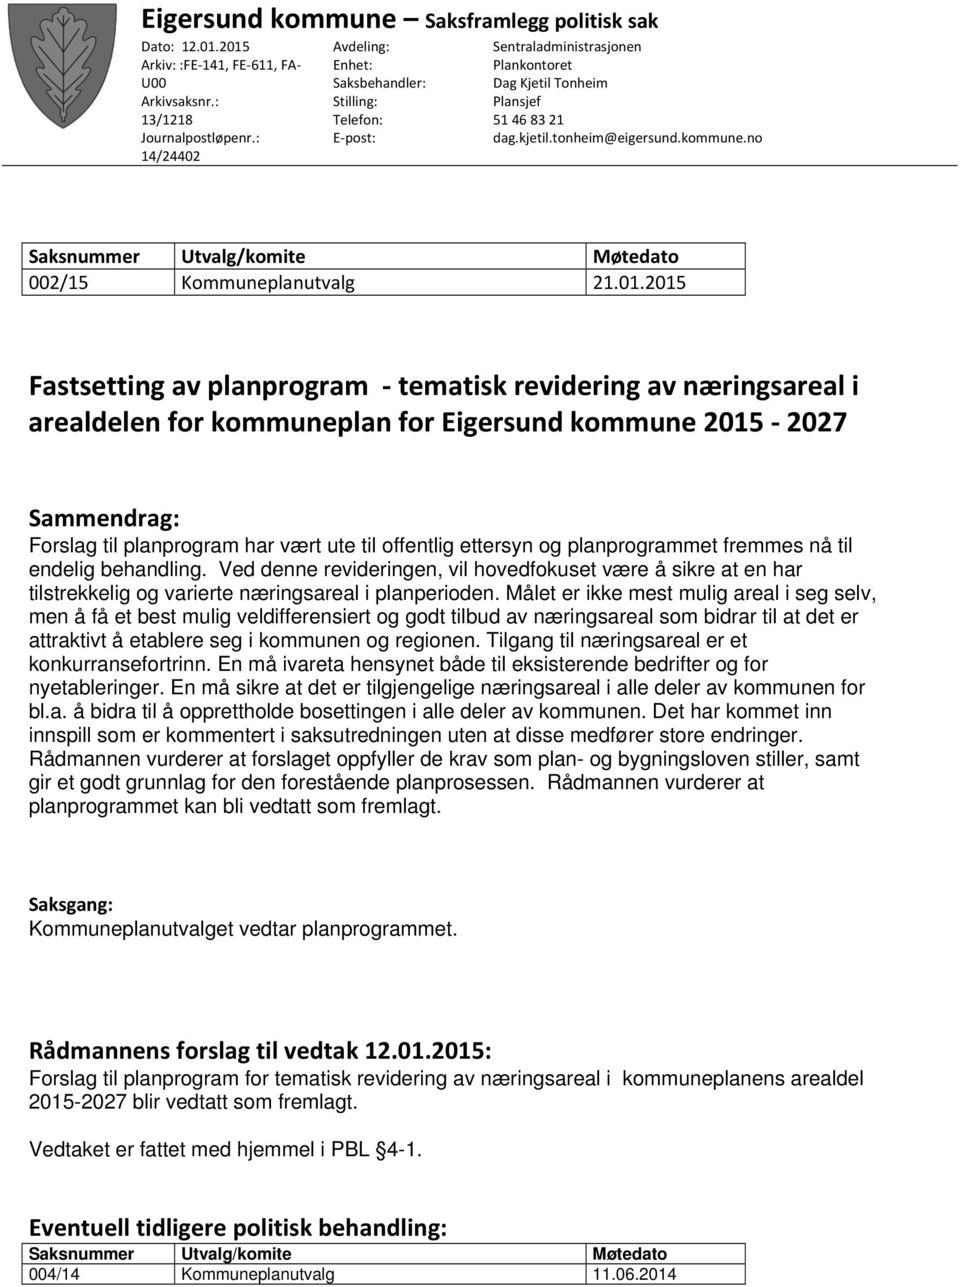 no Saksnummer Utvalg/komite Møtedato 002/15 Kommuneplanutvalg 21.01.